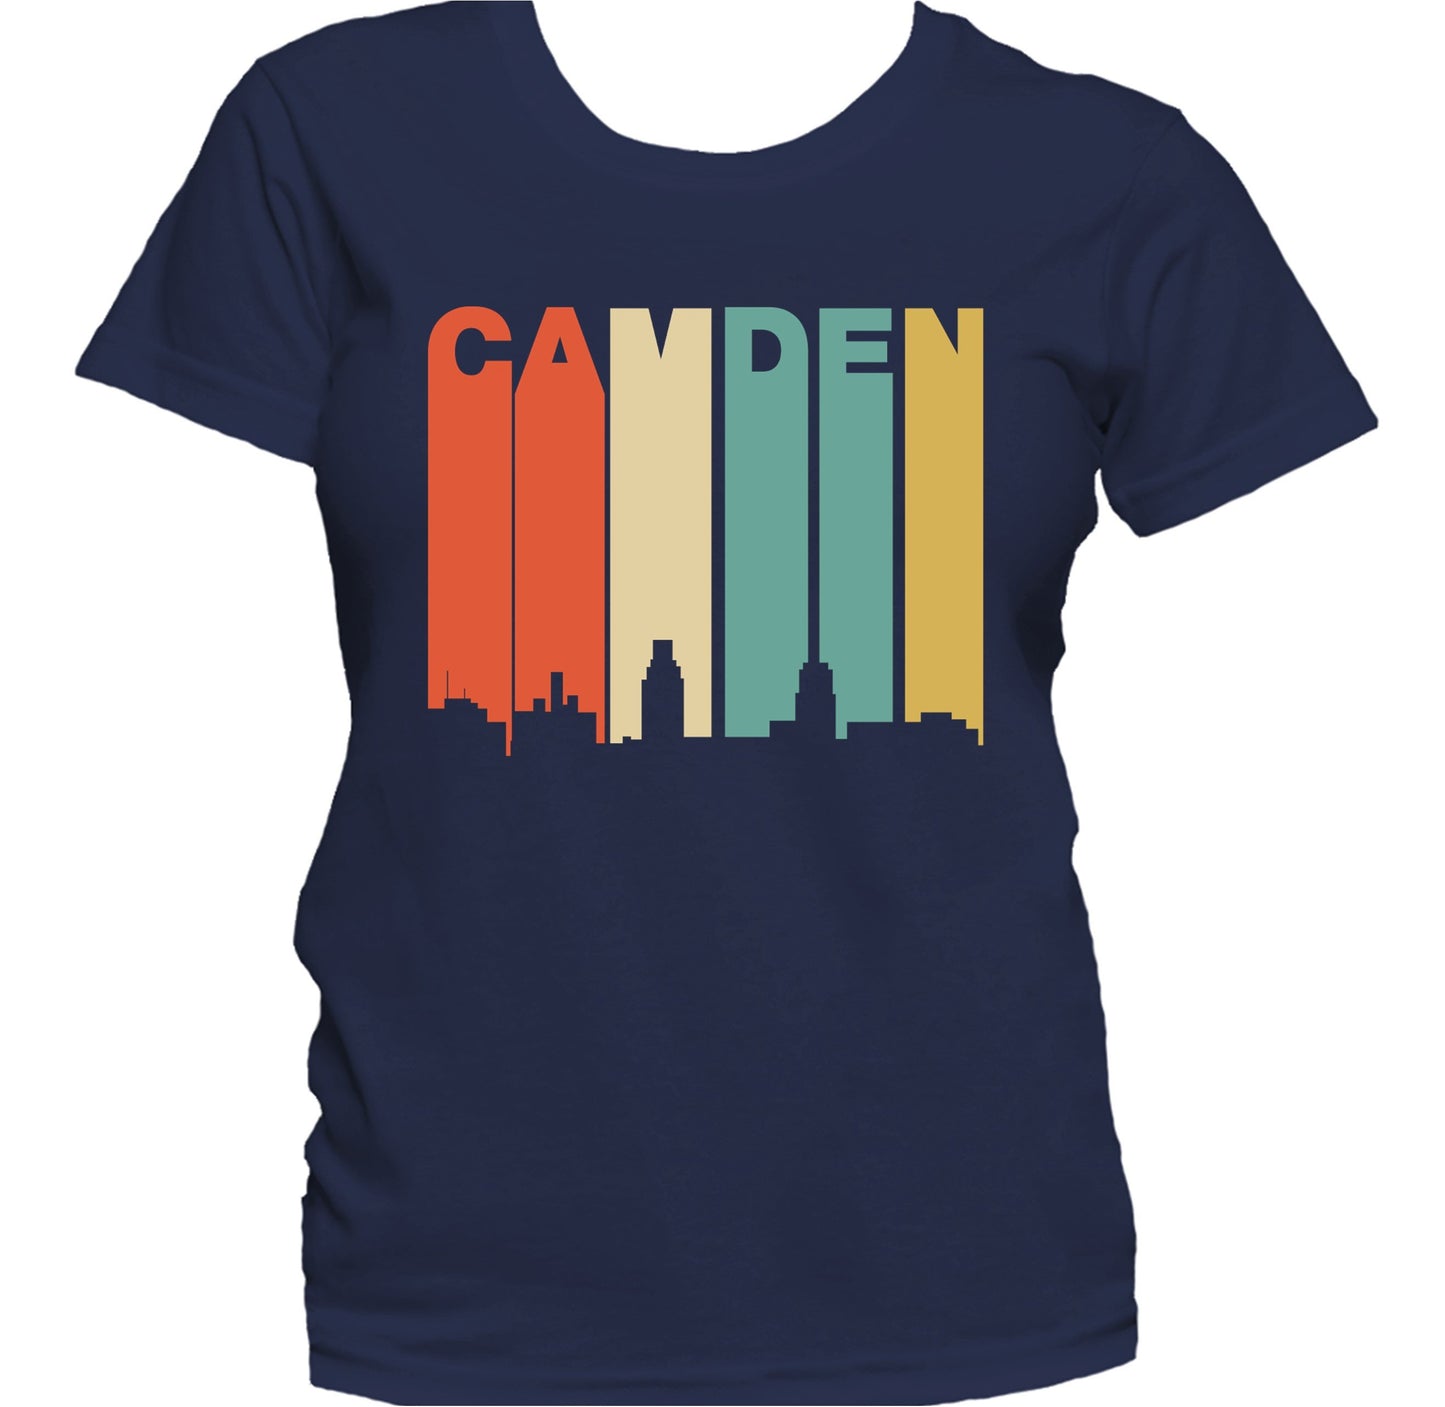 Retro 1970's Style Camden New Jersey Skyline Women's T-Shirt